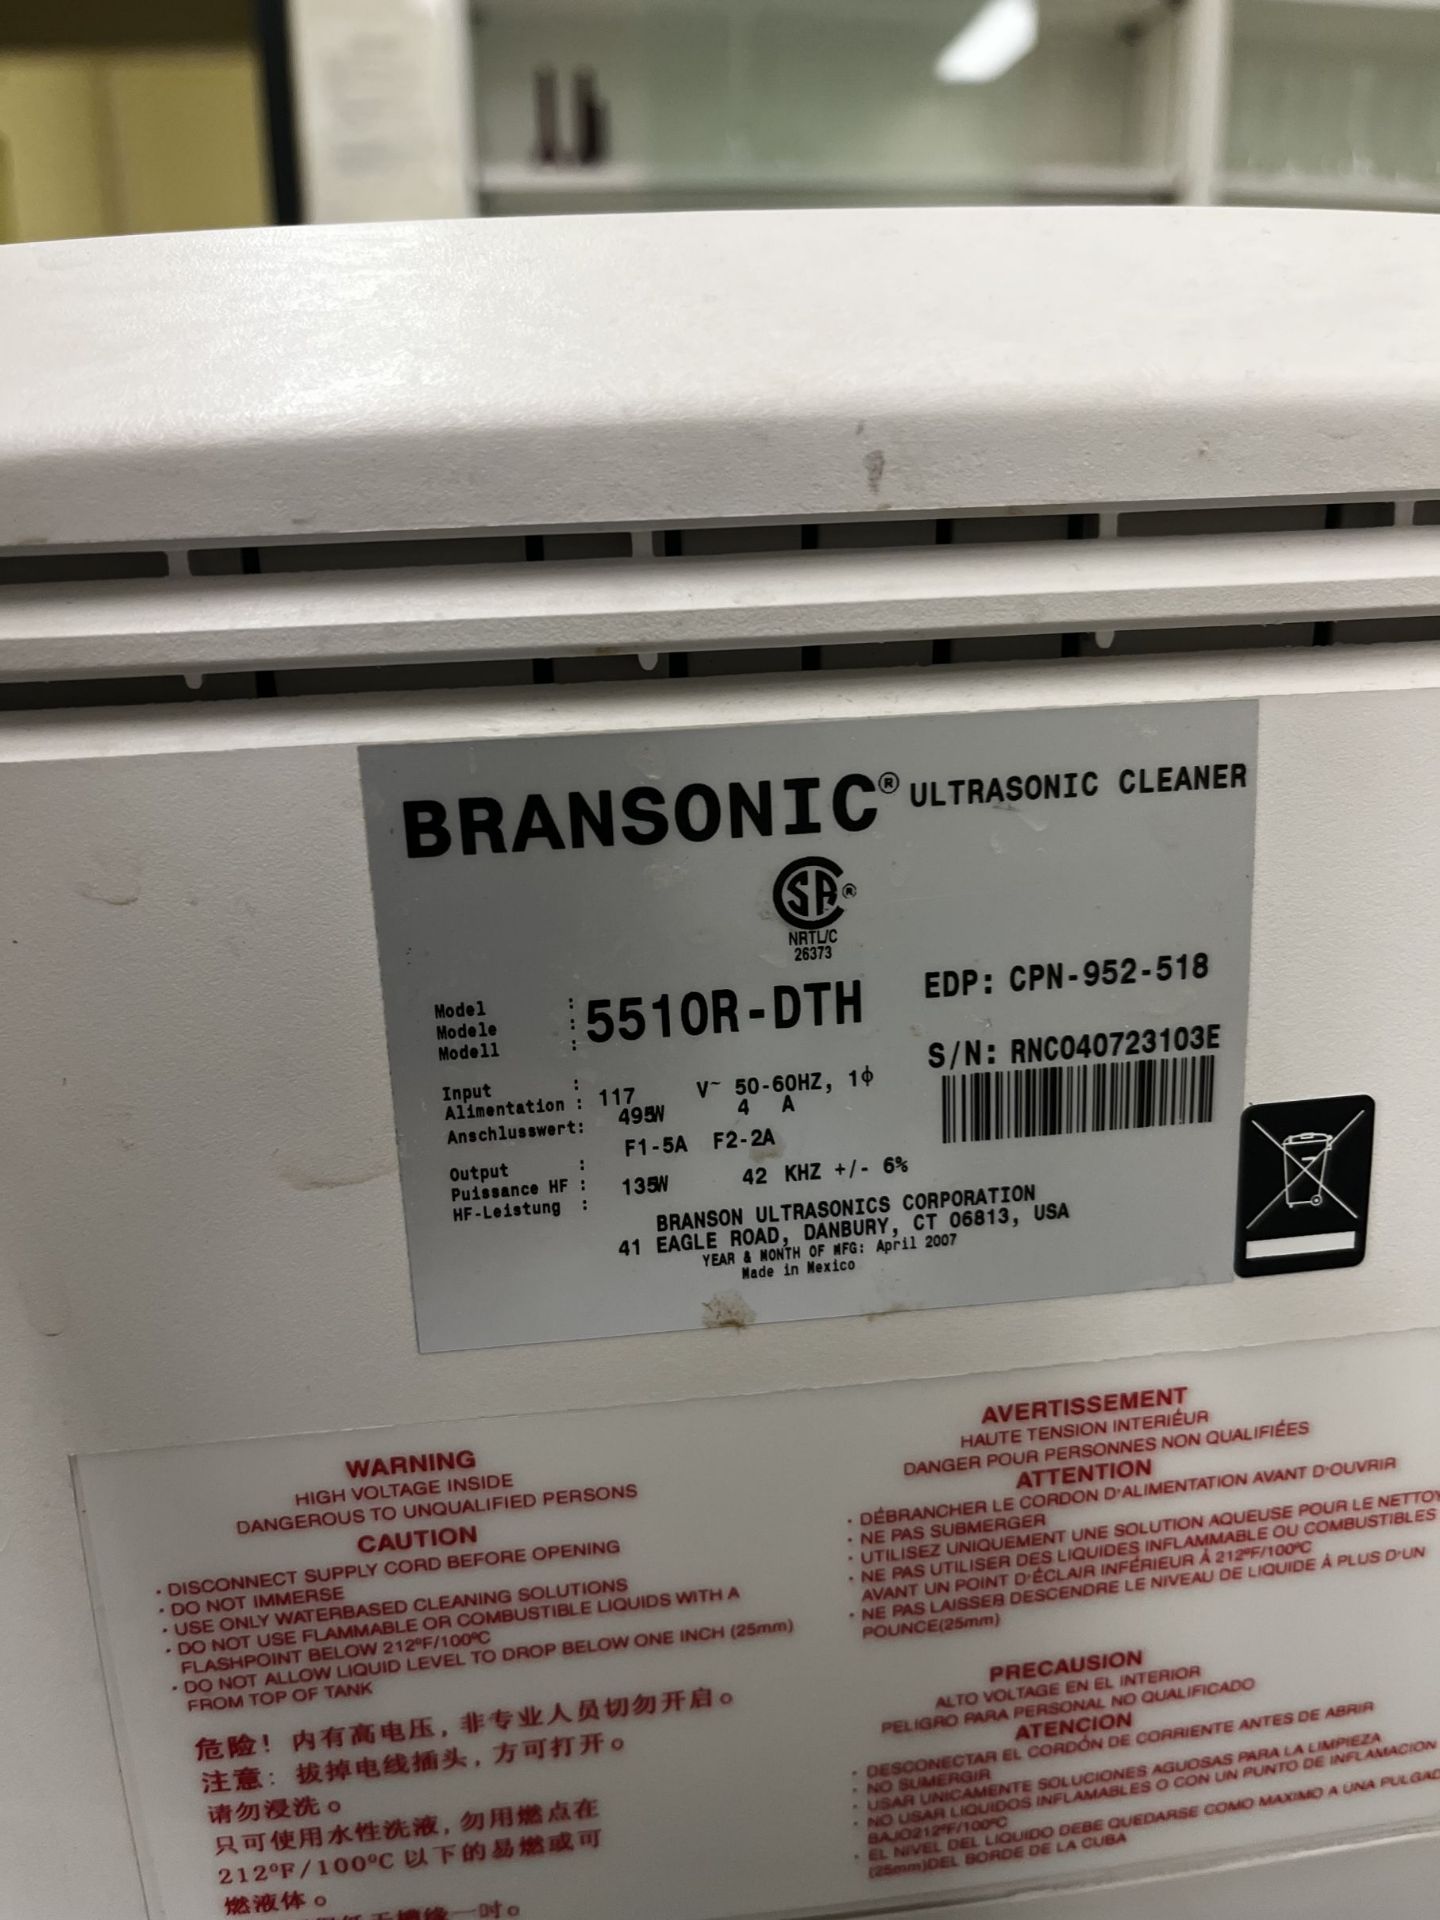 Branson Ultrasonic Cleaner - Image 3 of 5